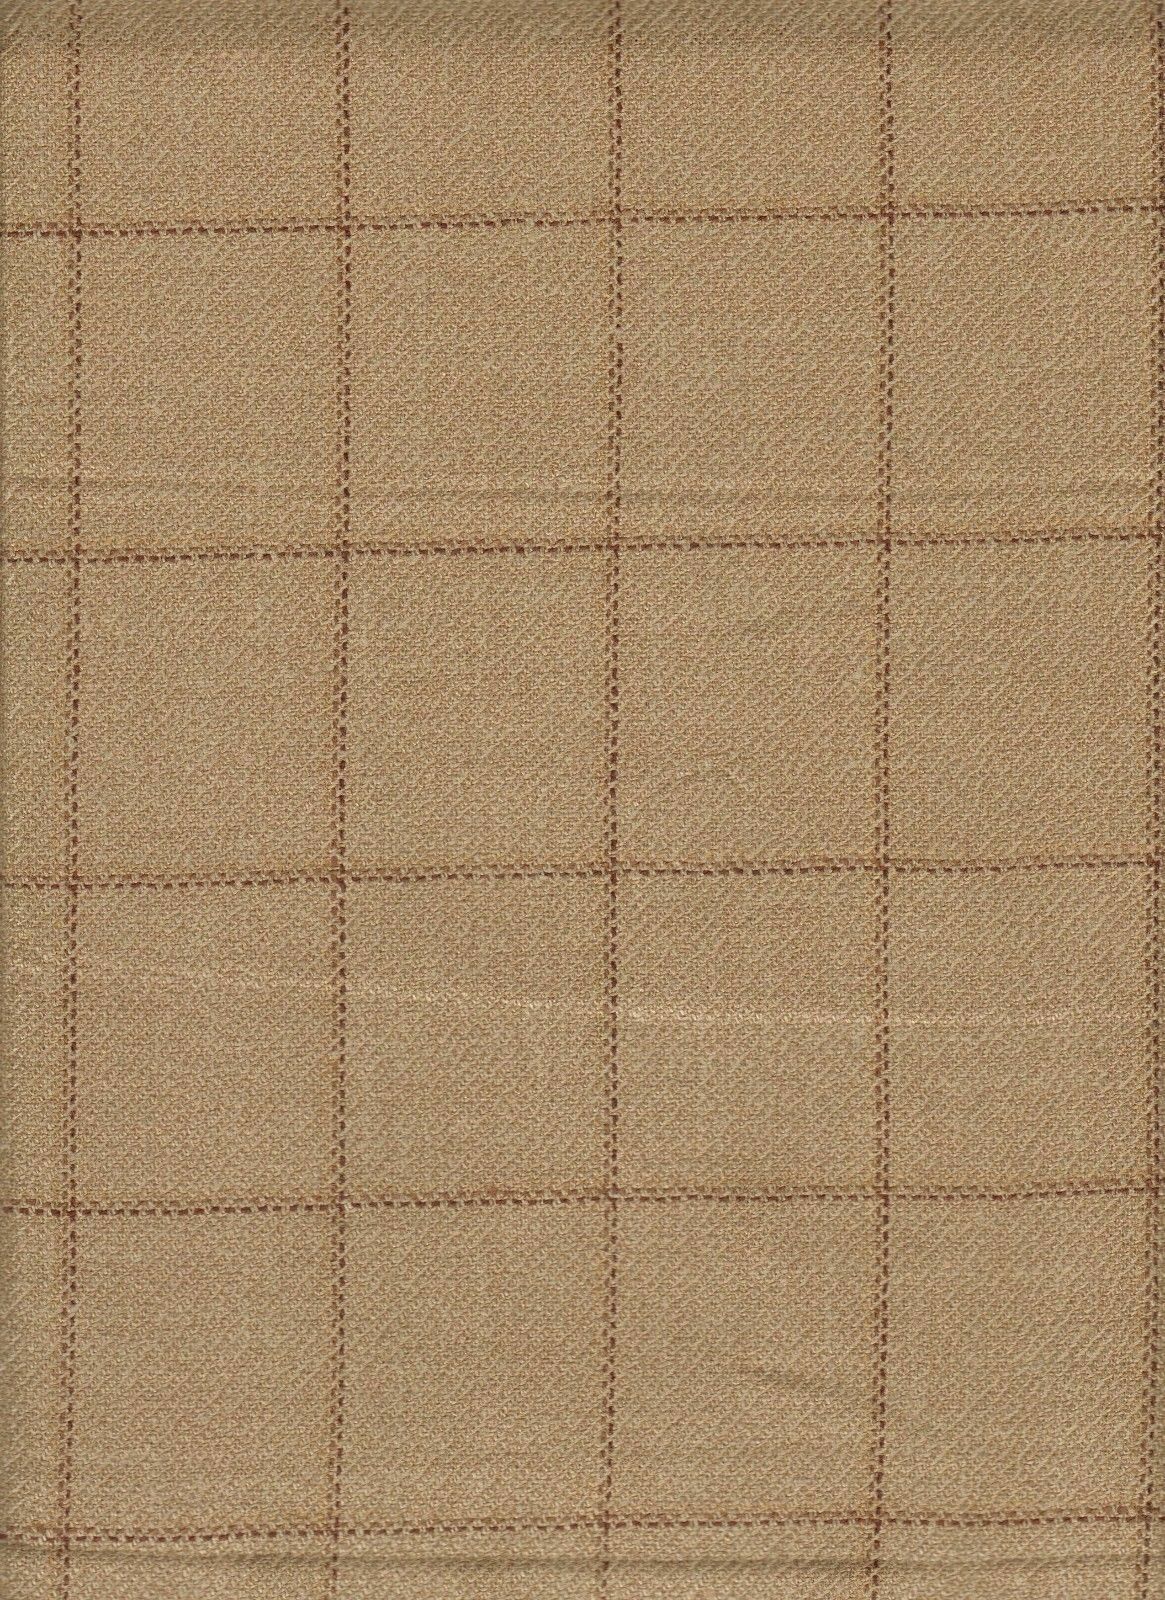 Holland & Sherry Window Pane Wheat Wool Tweed Upholstery Fabric BY THE YARD GI8